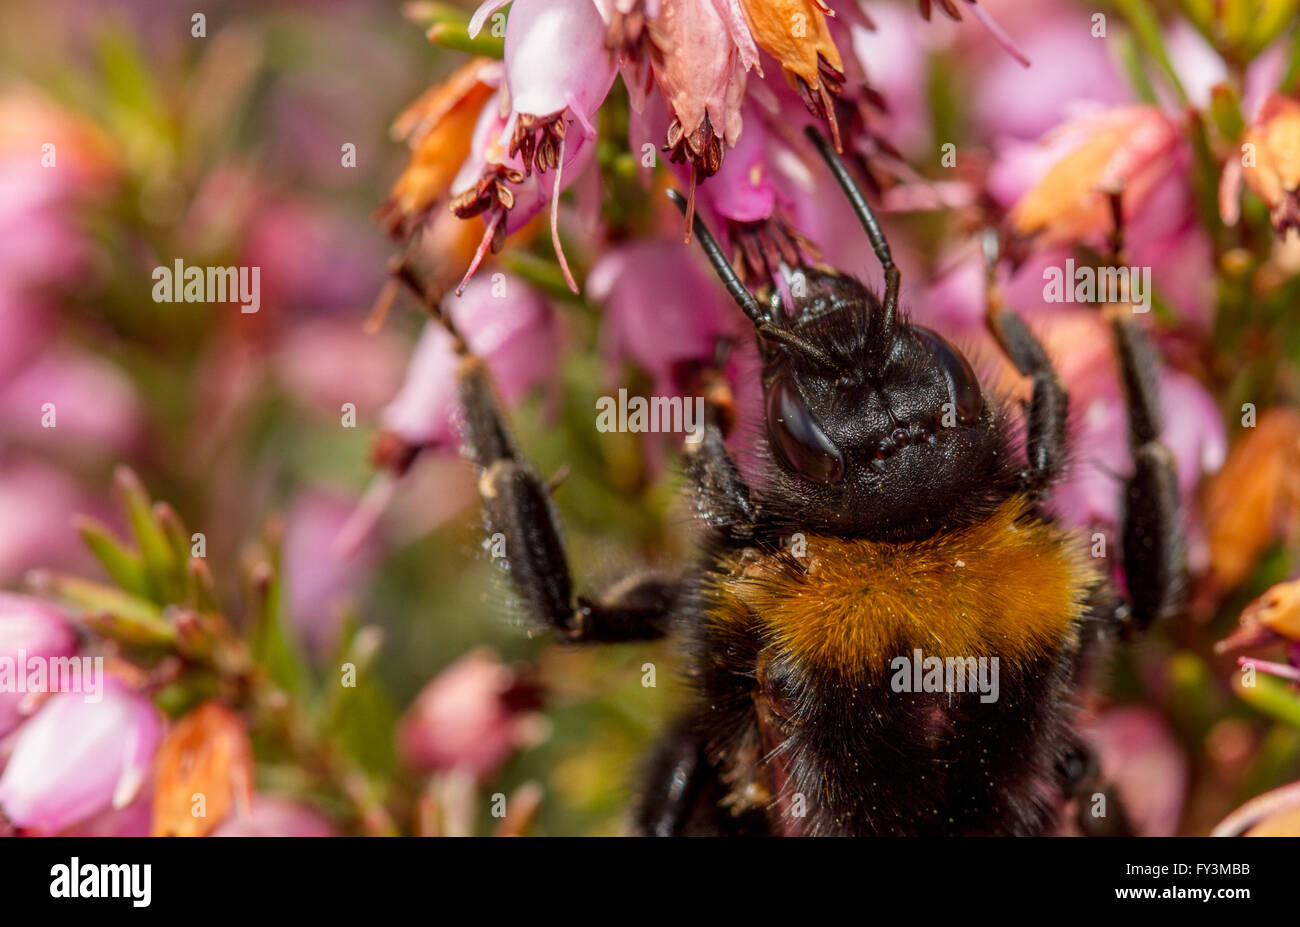 Buff-tailed Bumblebee (Bombus terrestris) feeding on heather flowers Stock Photo